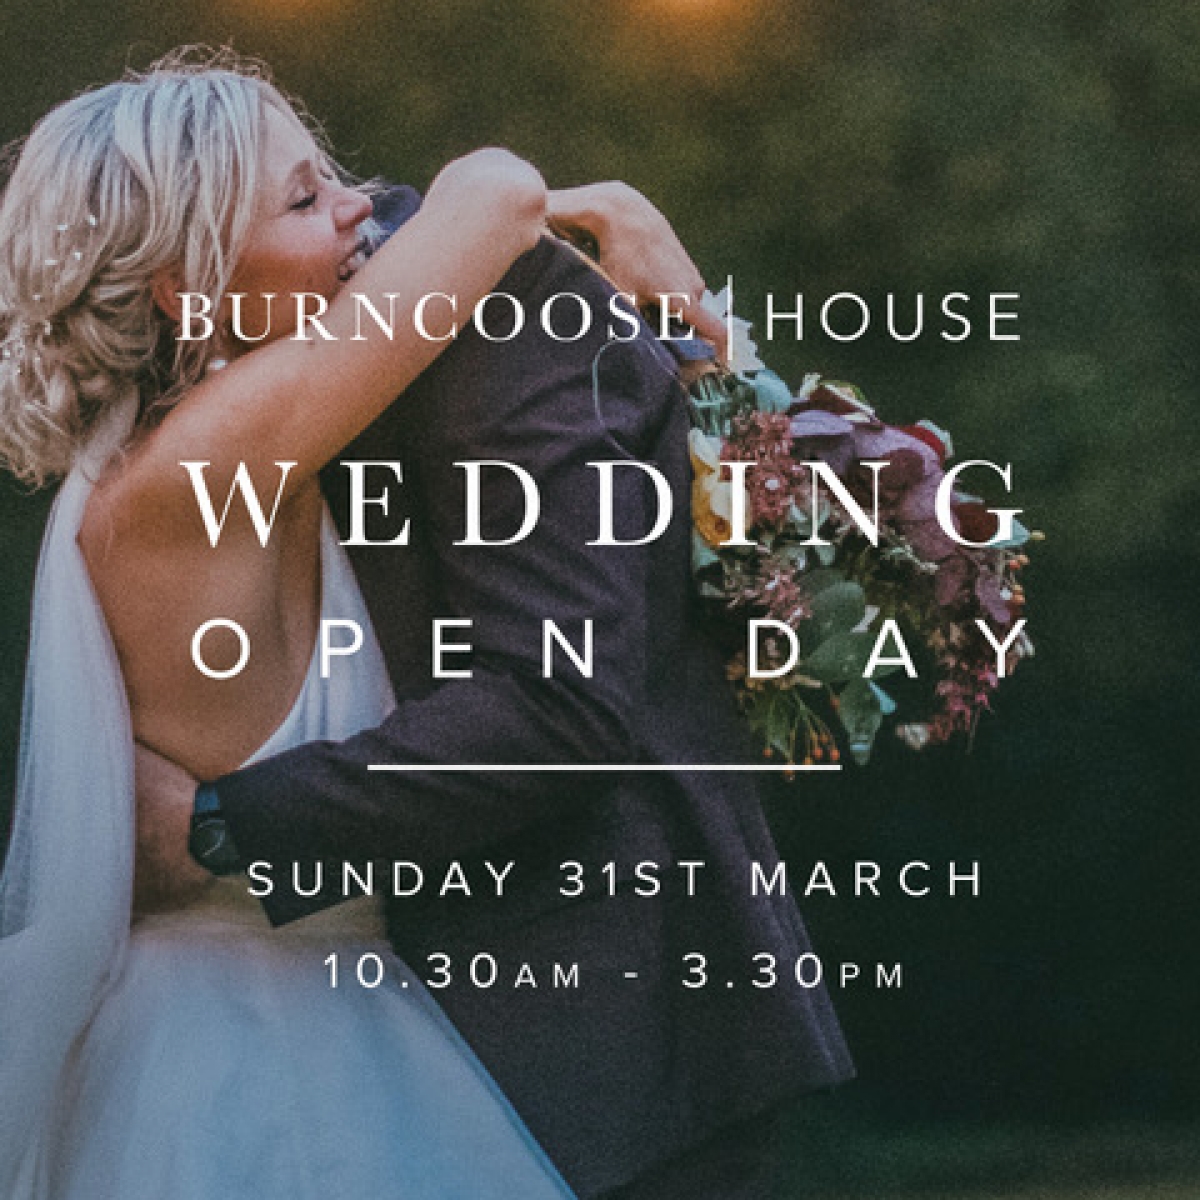 Burncoose House Wedding Open Day